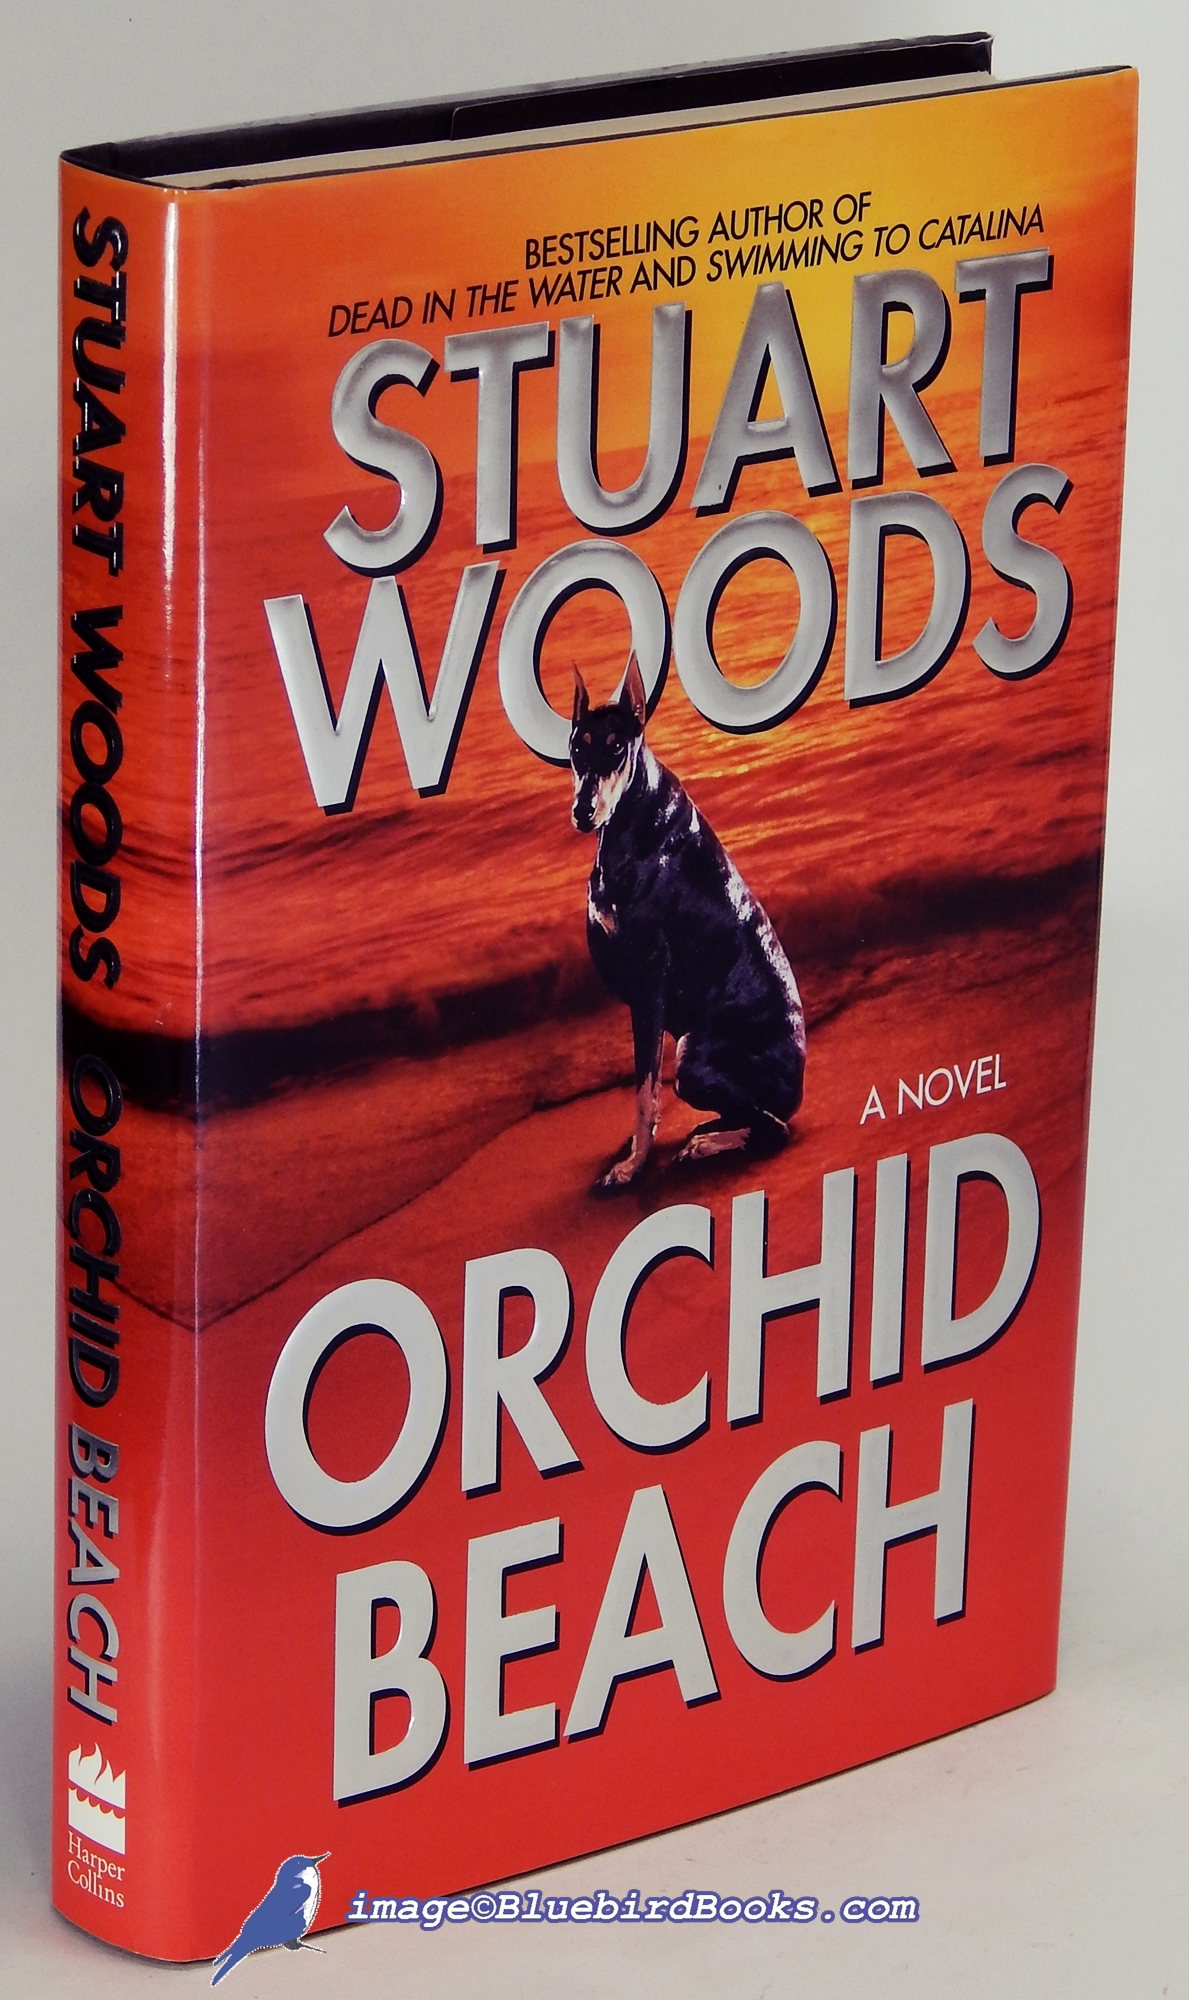 WOODS, STUART - Orchid Beach: A Novel